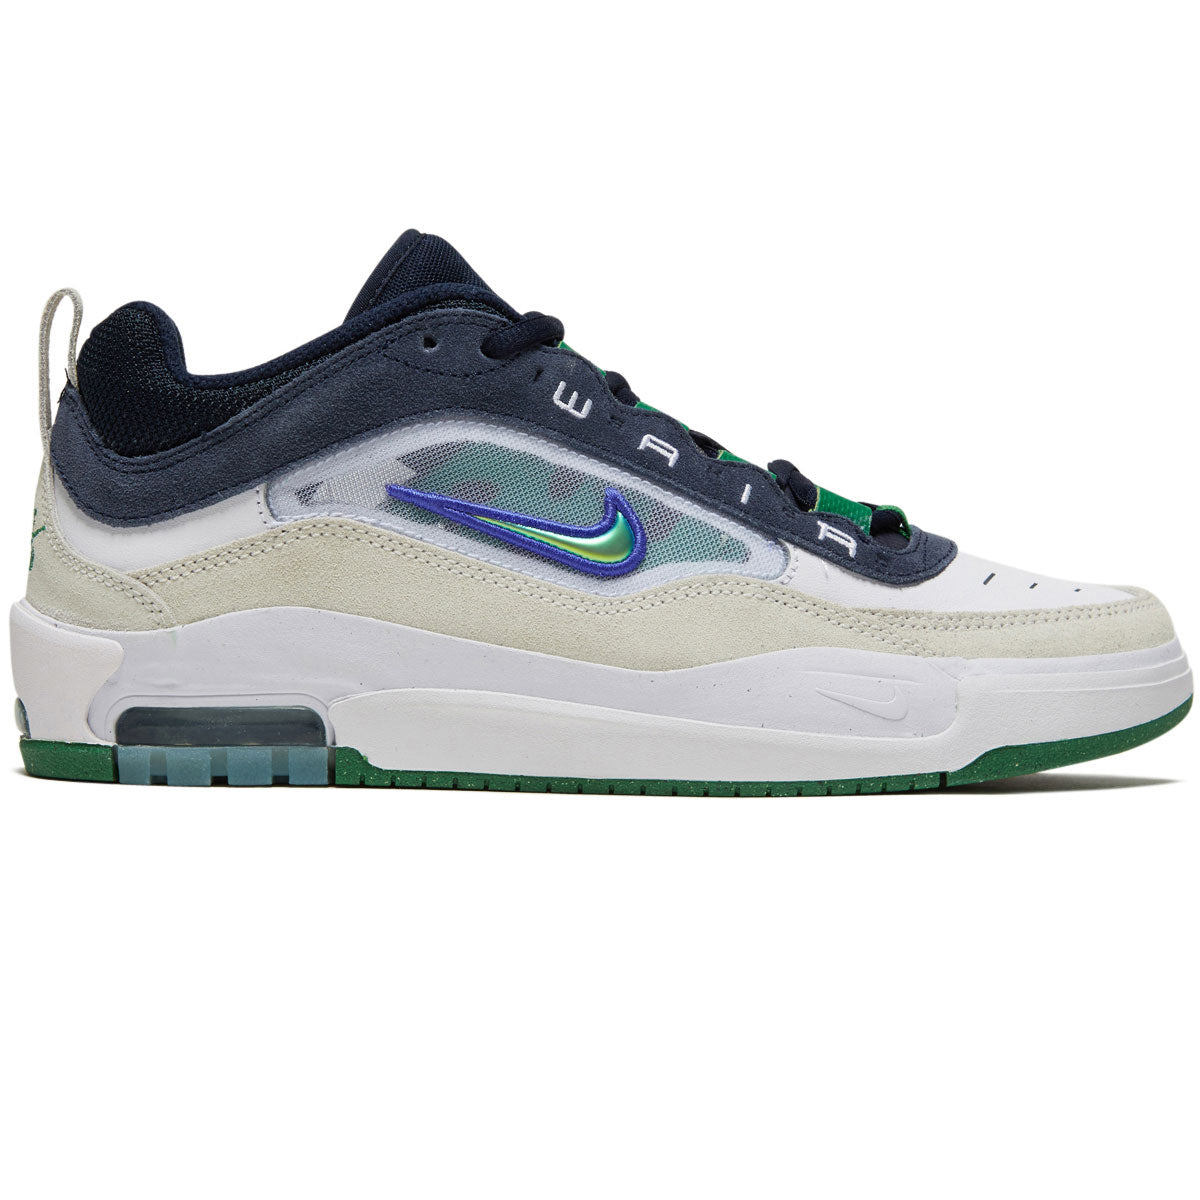 Nike SB Air Max Ishod Shoes - White/Persian Violet/Obsidian/Pine Green image 1